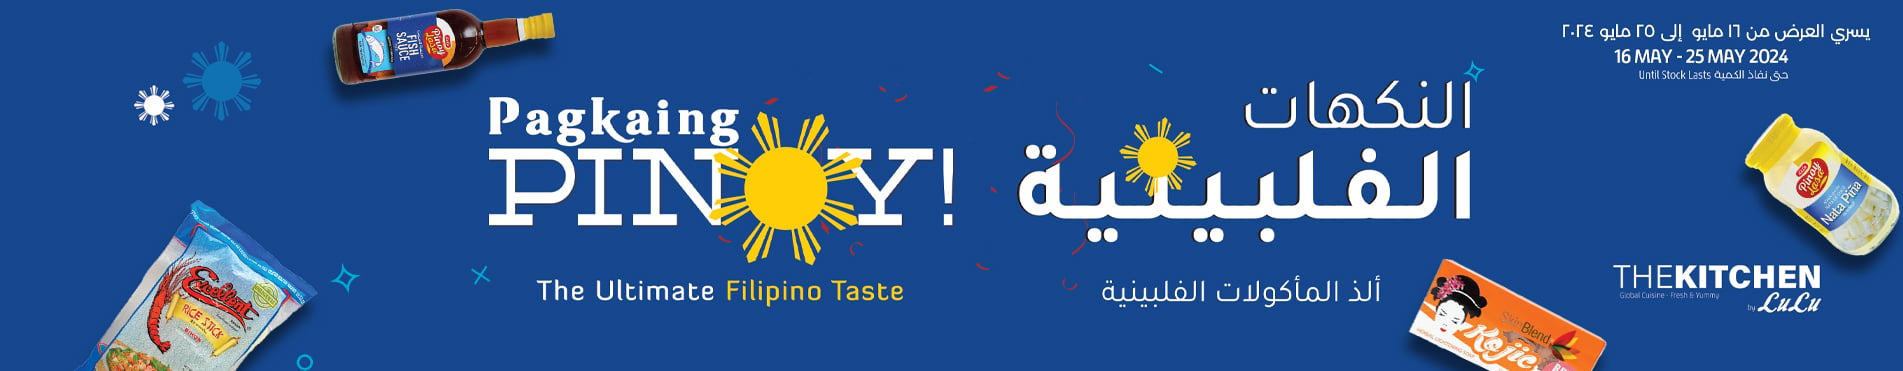 philippino fest may